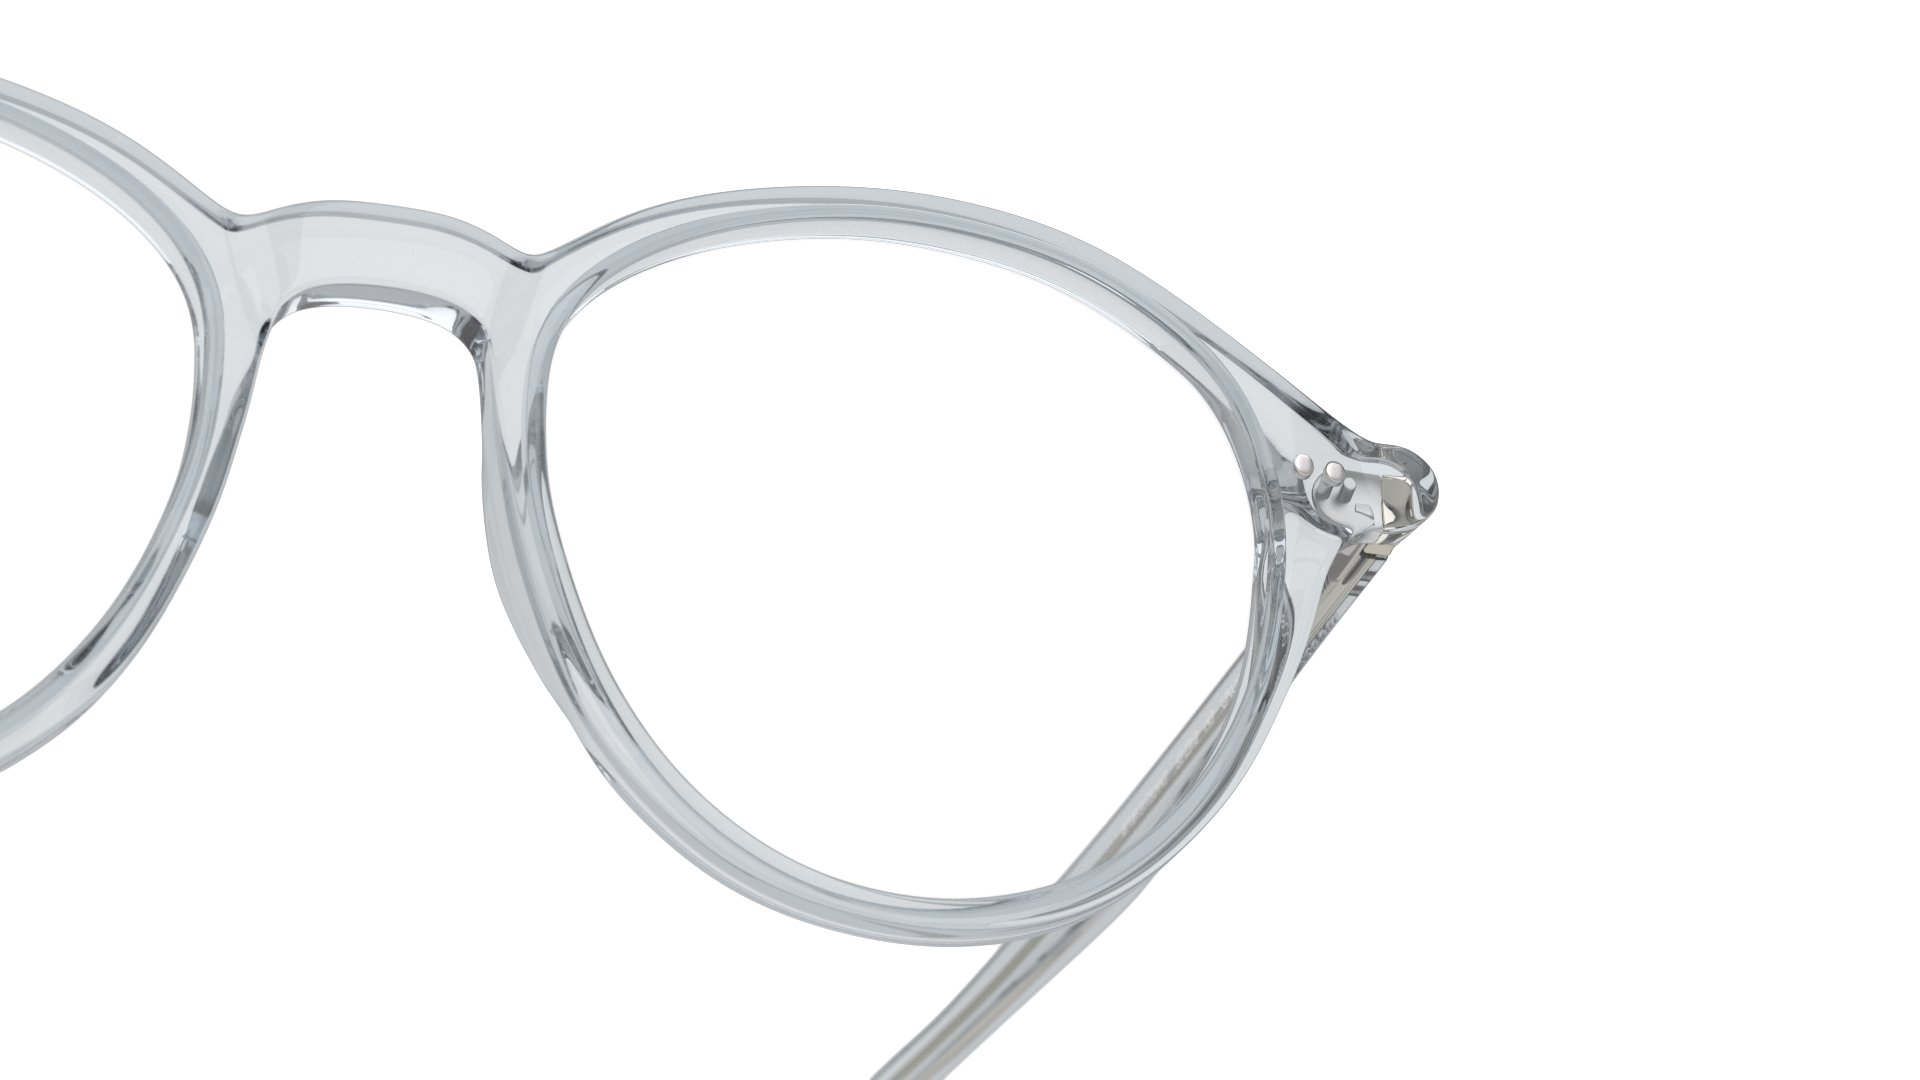 Detail01 Unofficial UNOM0185 (GG00) Glasses Transparent / Transparent, Grey